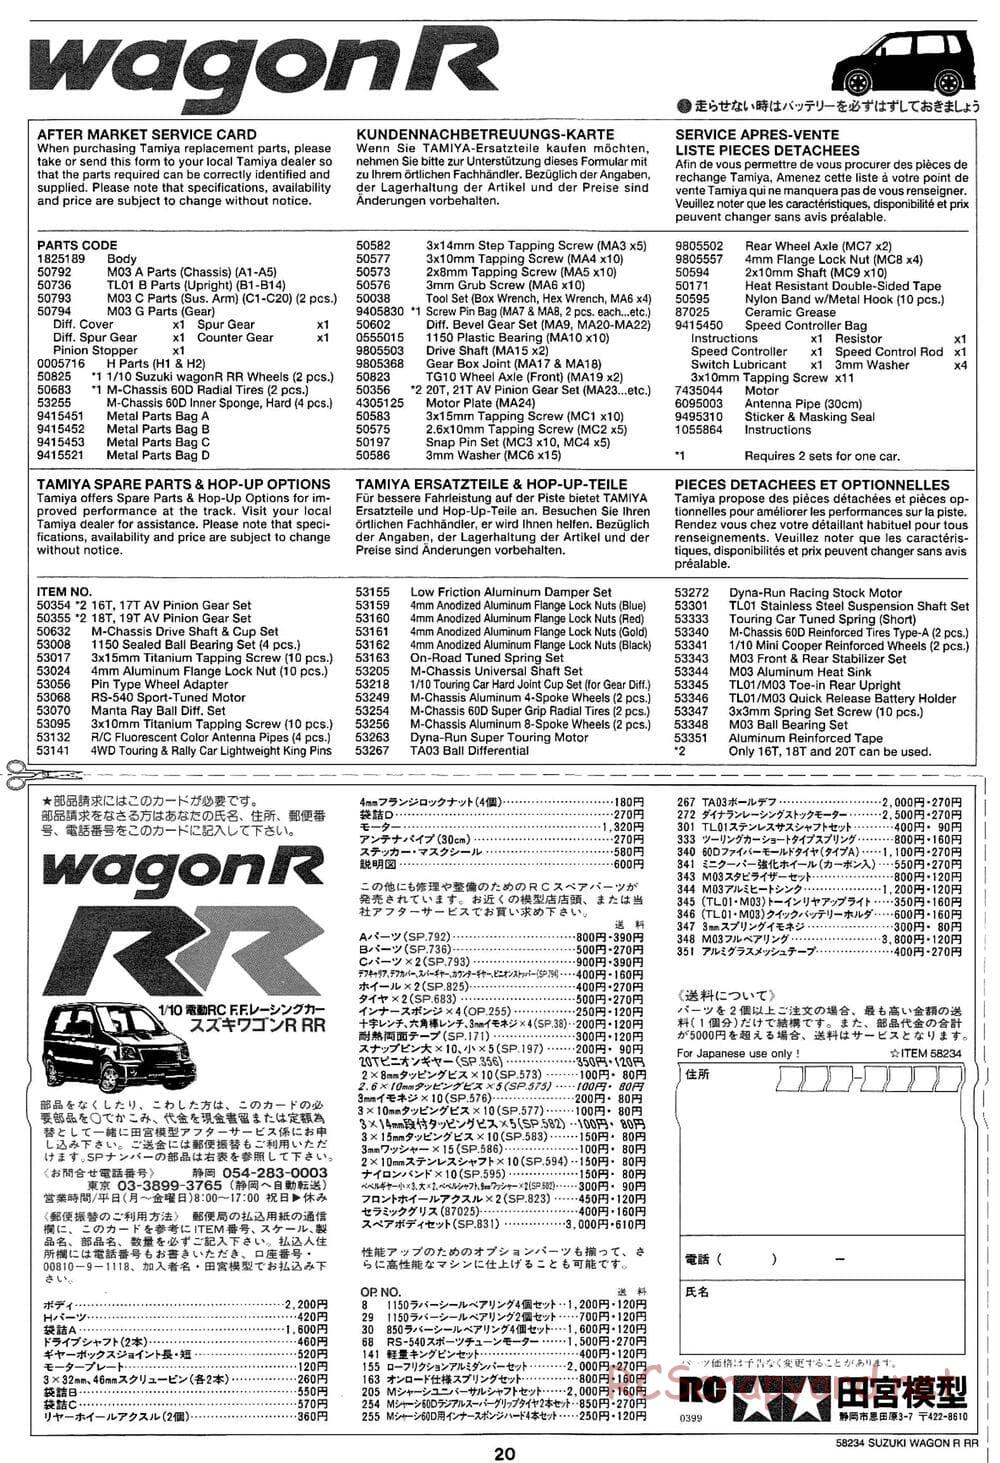 Tamiya - Suzuki WagonR-RR - M03 Chassis - Manual - Page 20